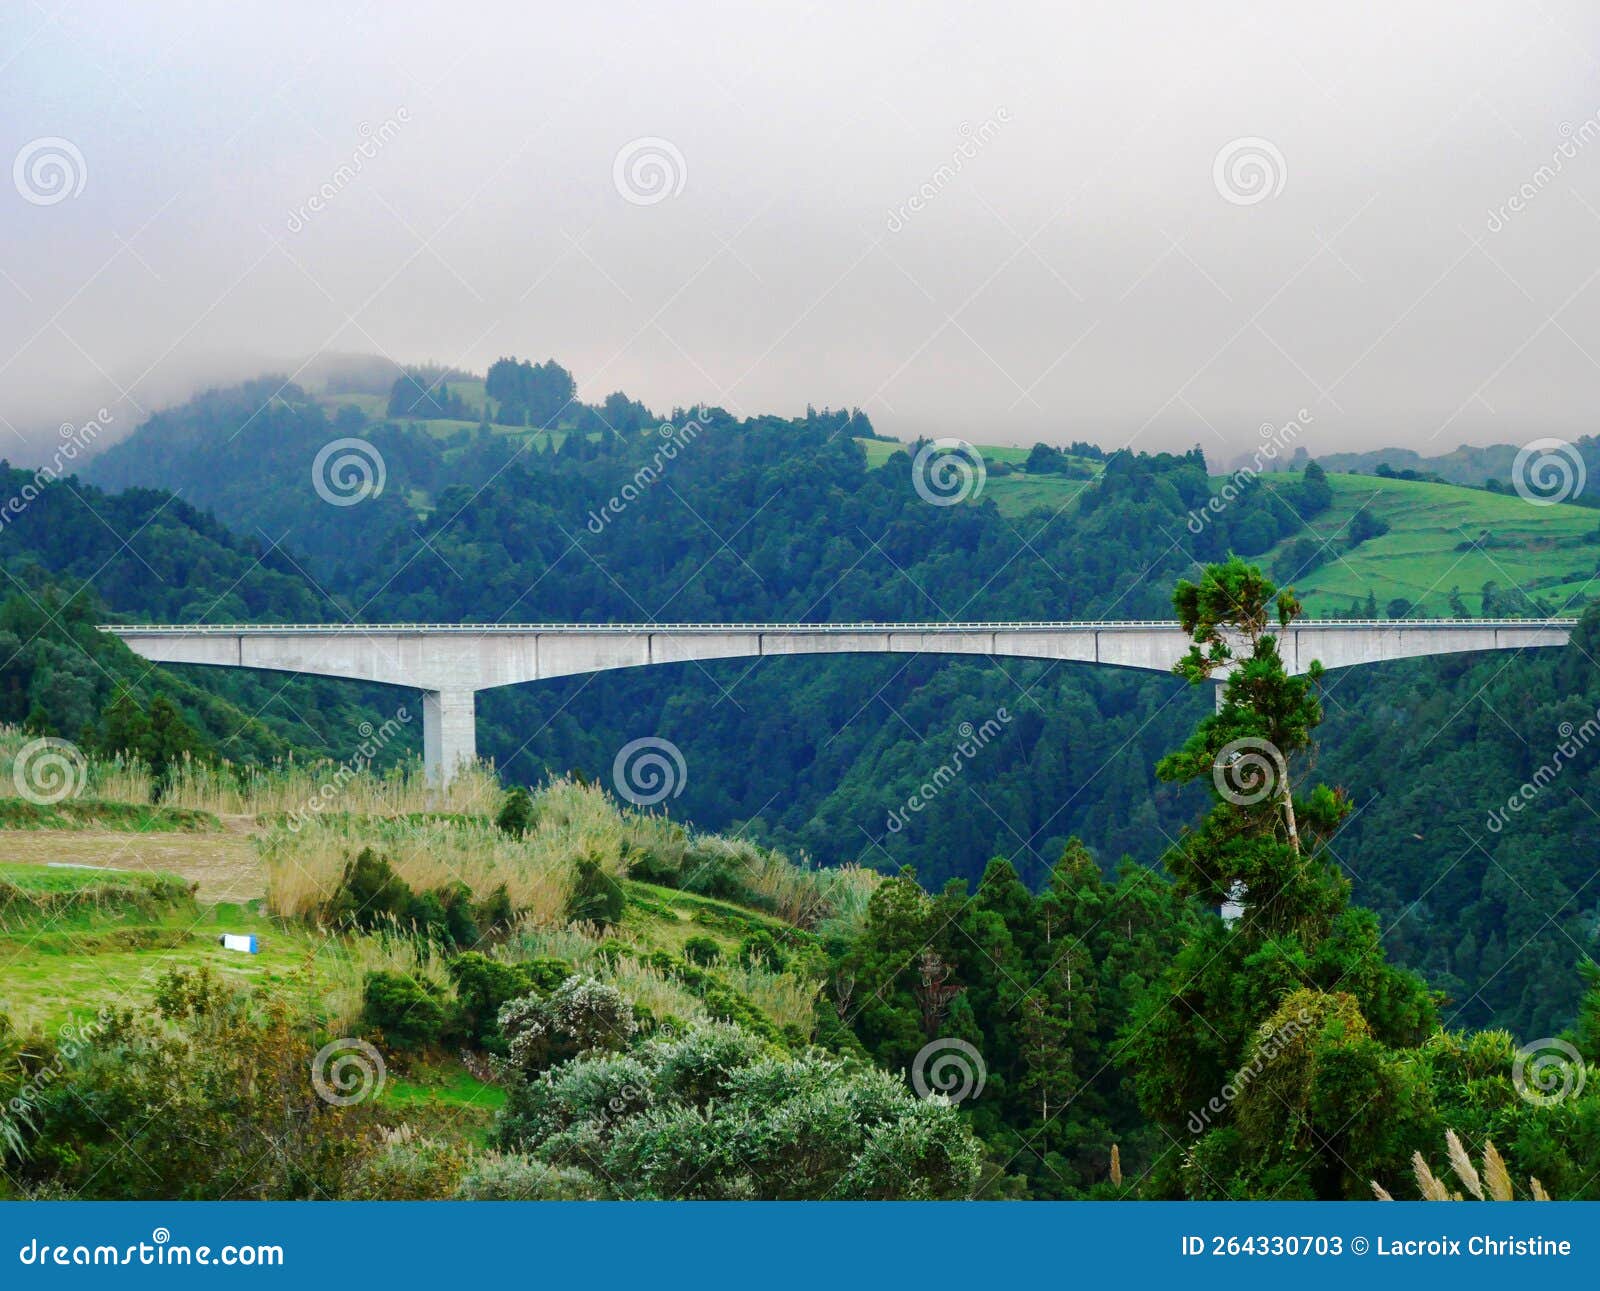 despe-te-que-suas viaduct bridge in azores